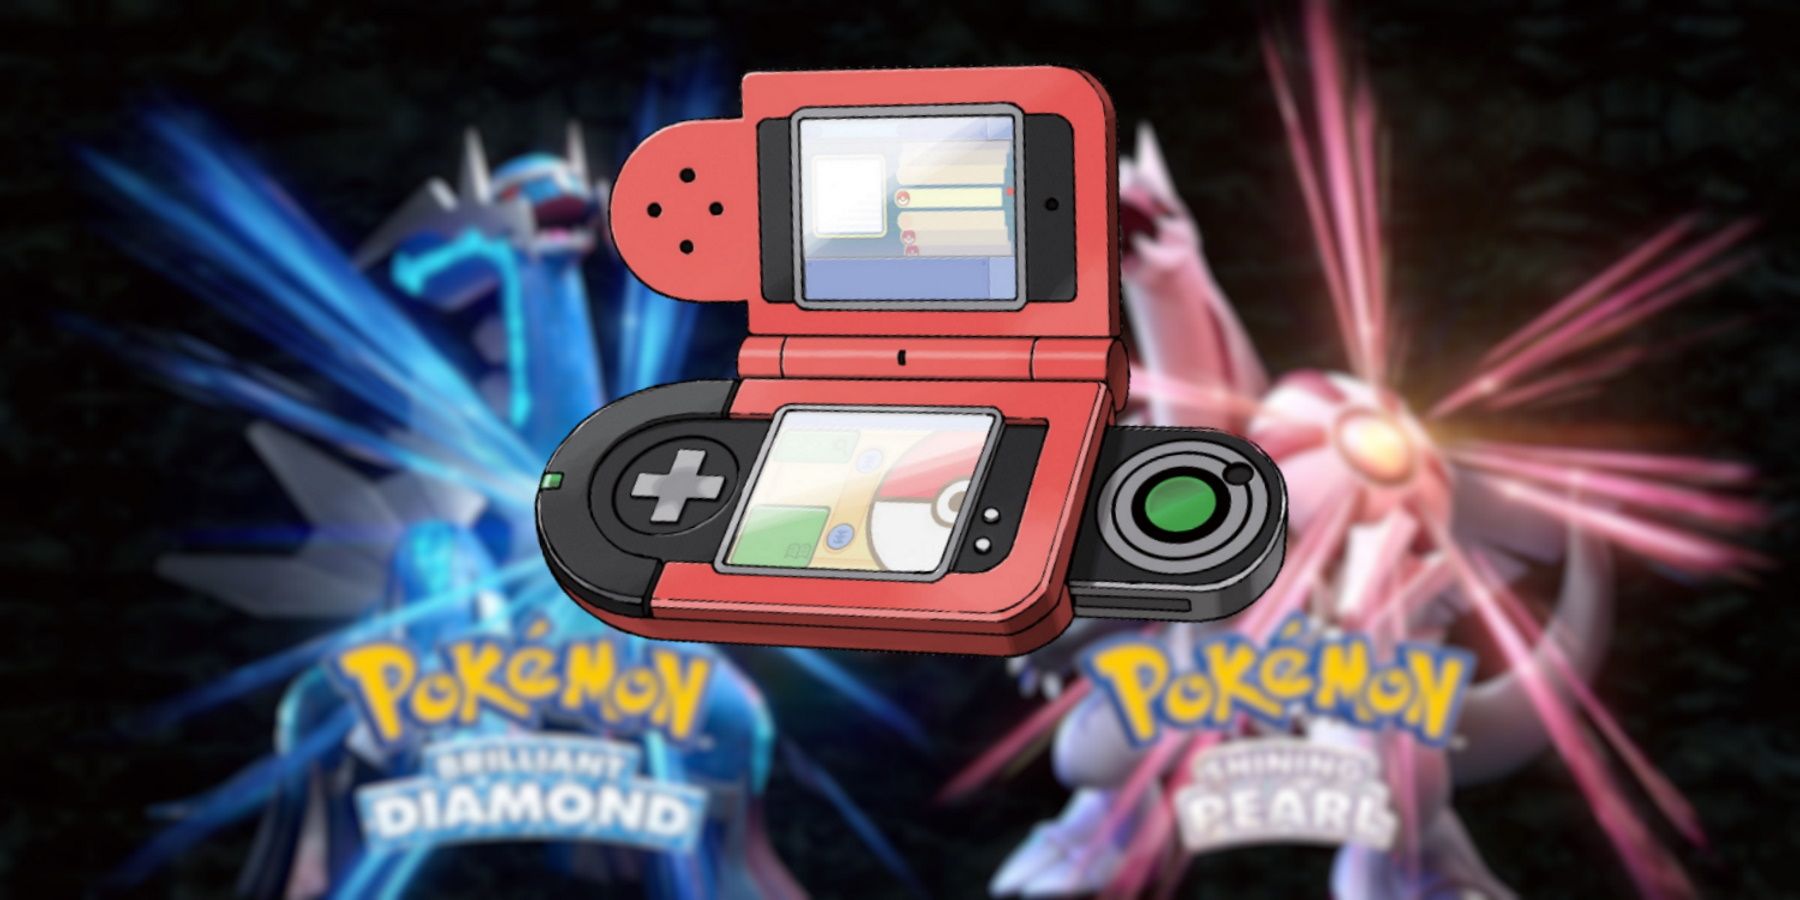 Pokémon Brilliant Diamond & Shining Pearl - Sinnoh Pokédex